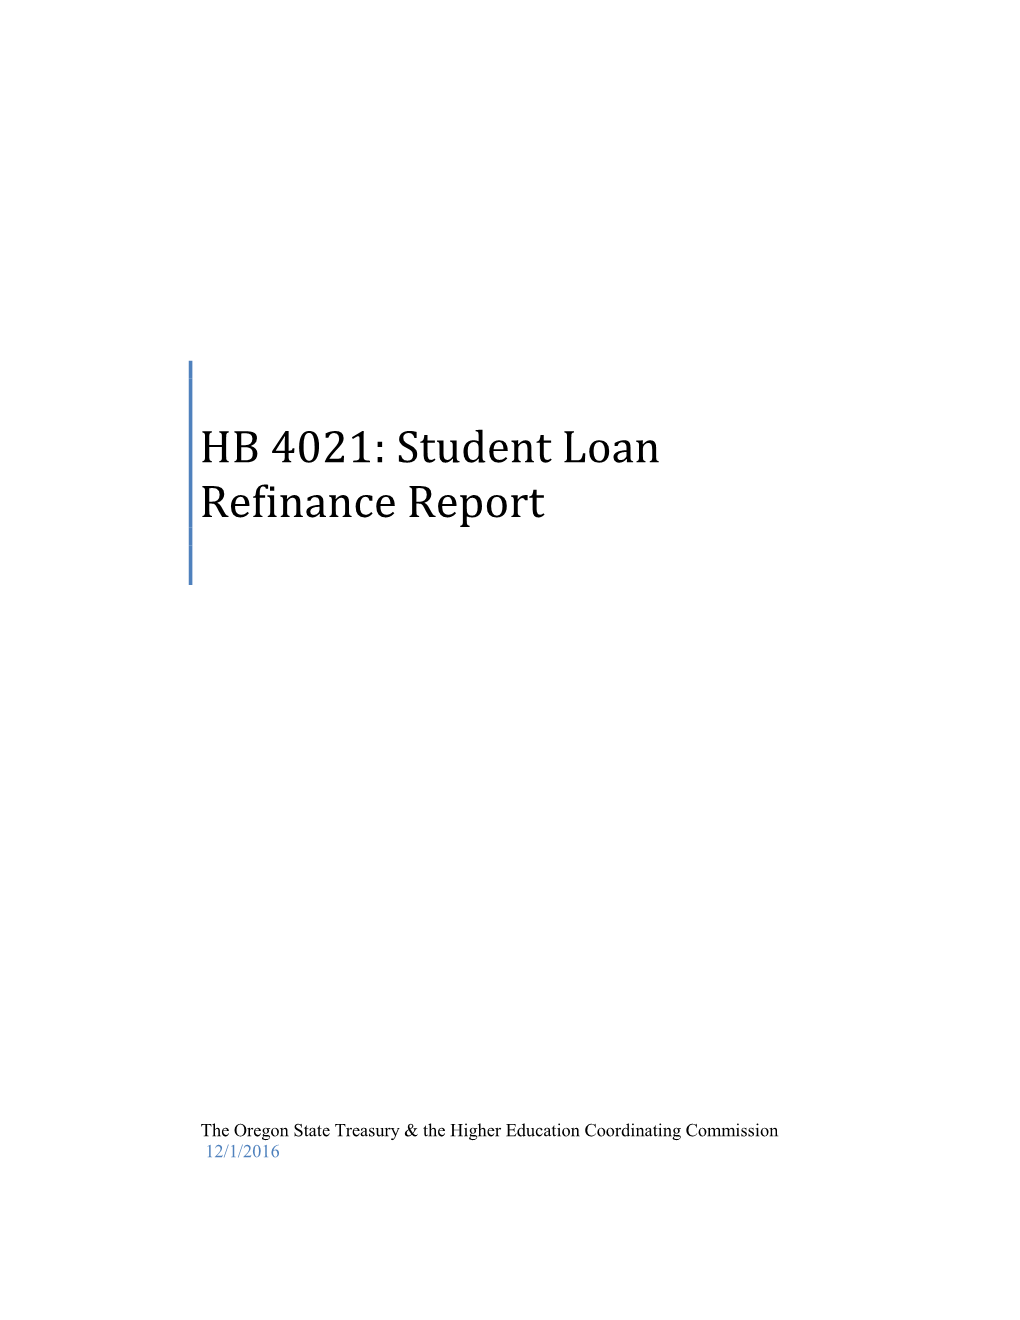 Student Loan Refinance Report